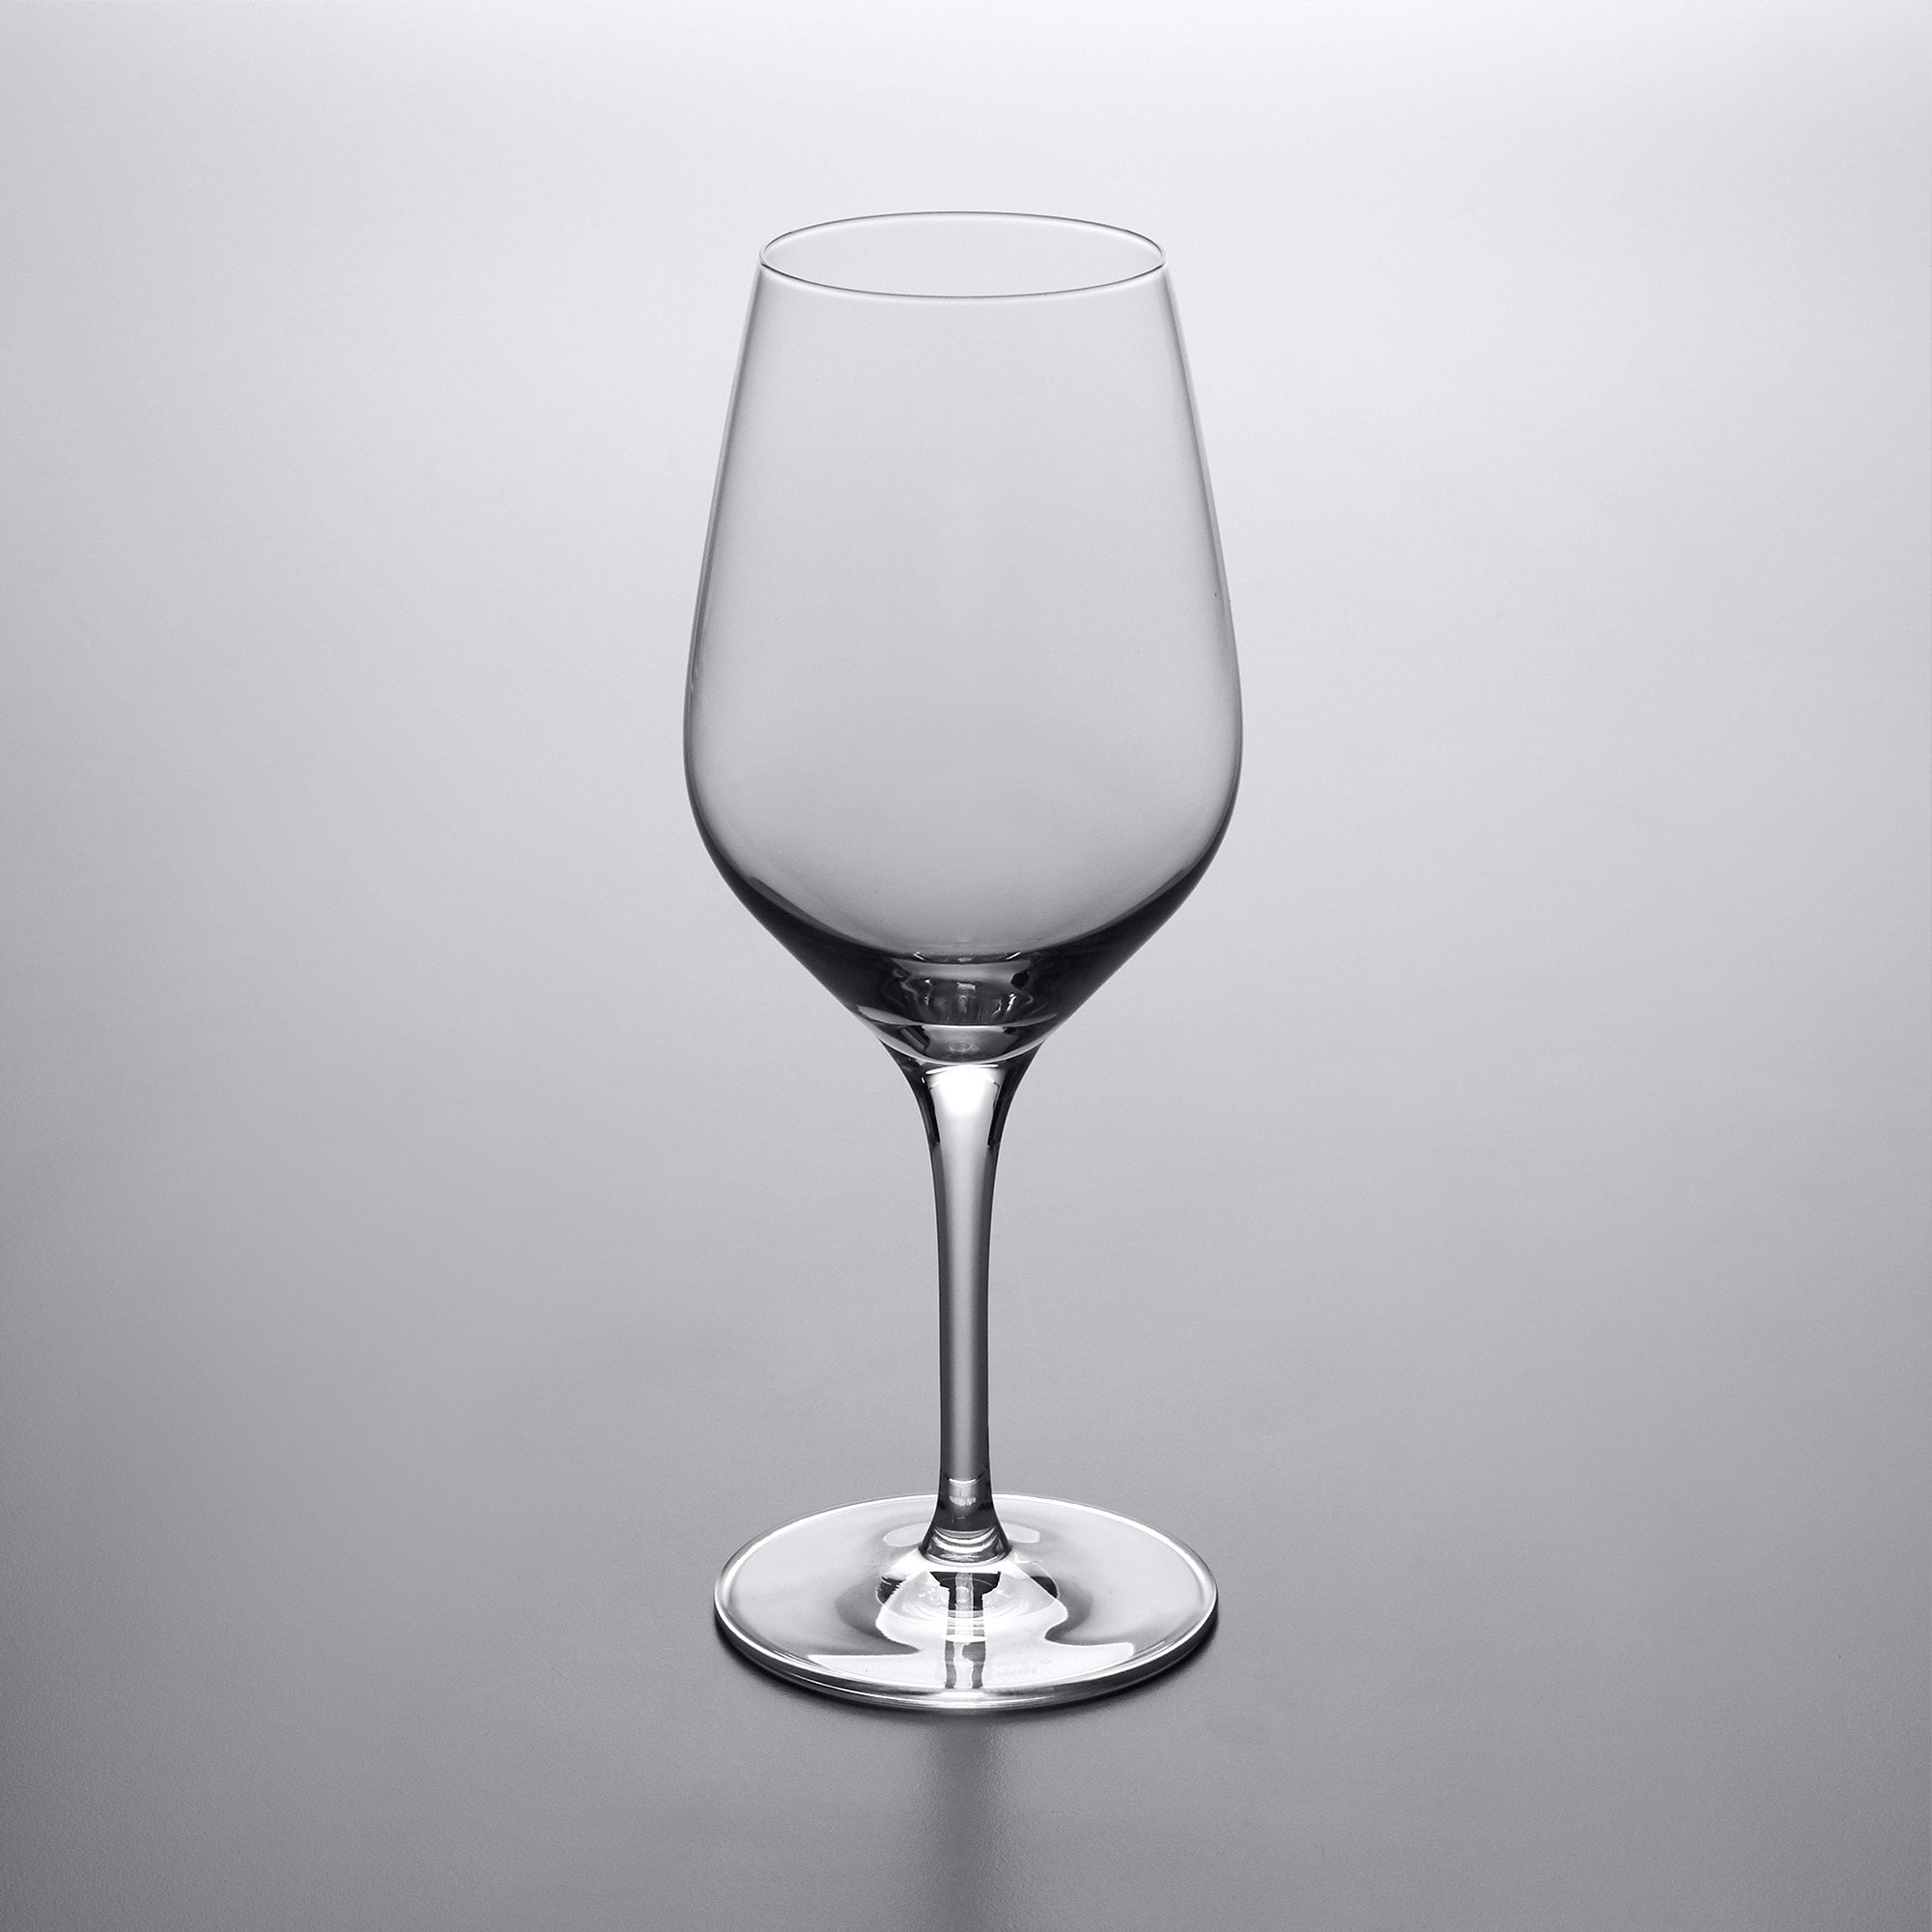 NEW STOLZE EXQUISIT ROYAL CHAMPAGNE FLUTES SET OF 6 PIECES GLASS GLASSWARE BAR 